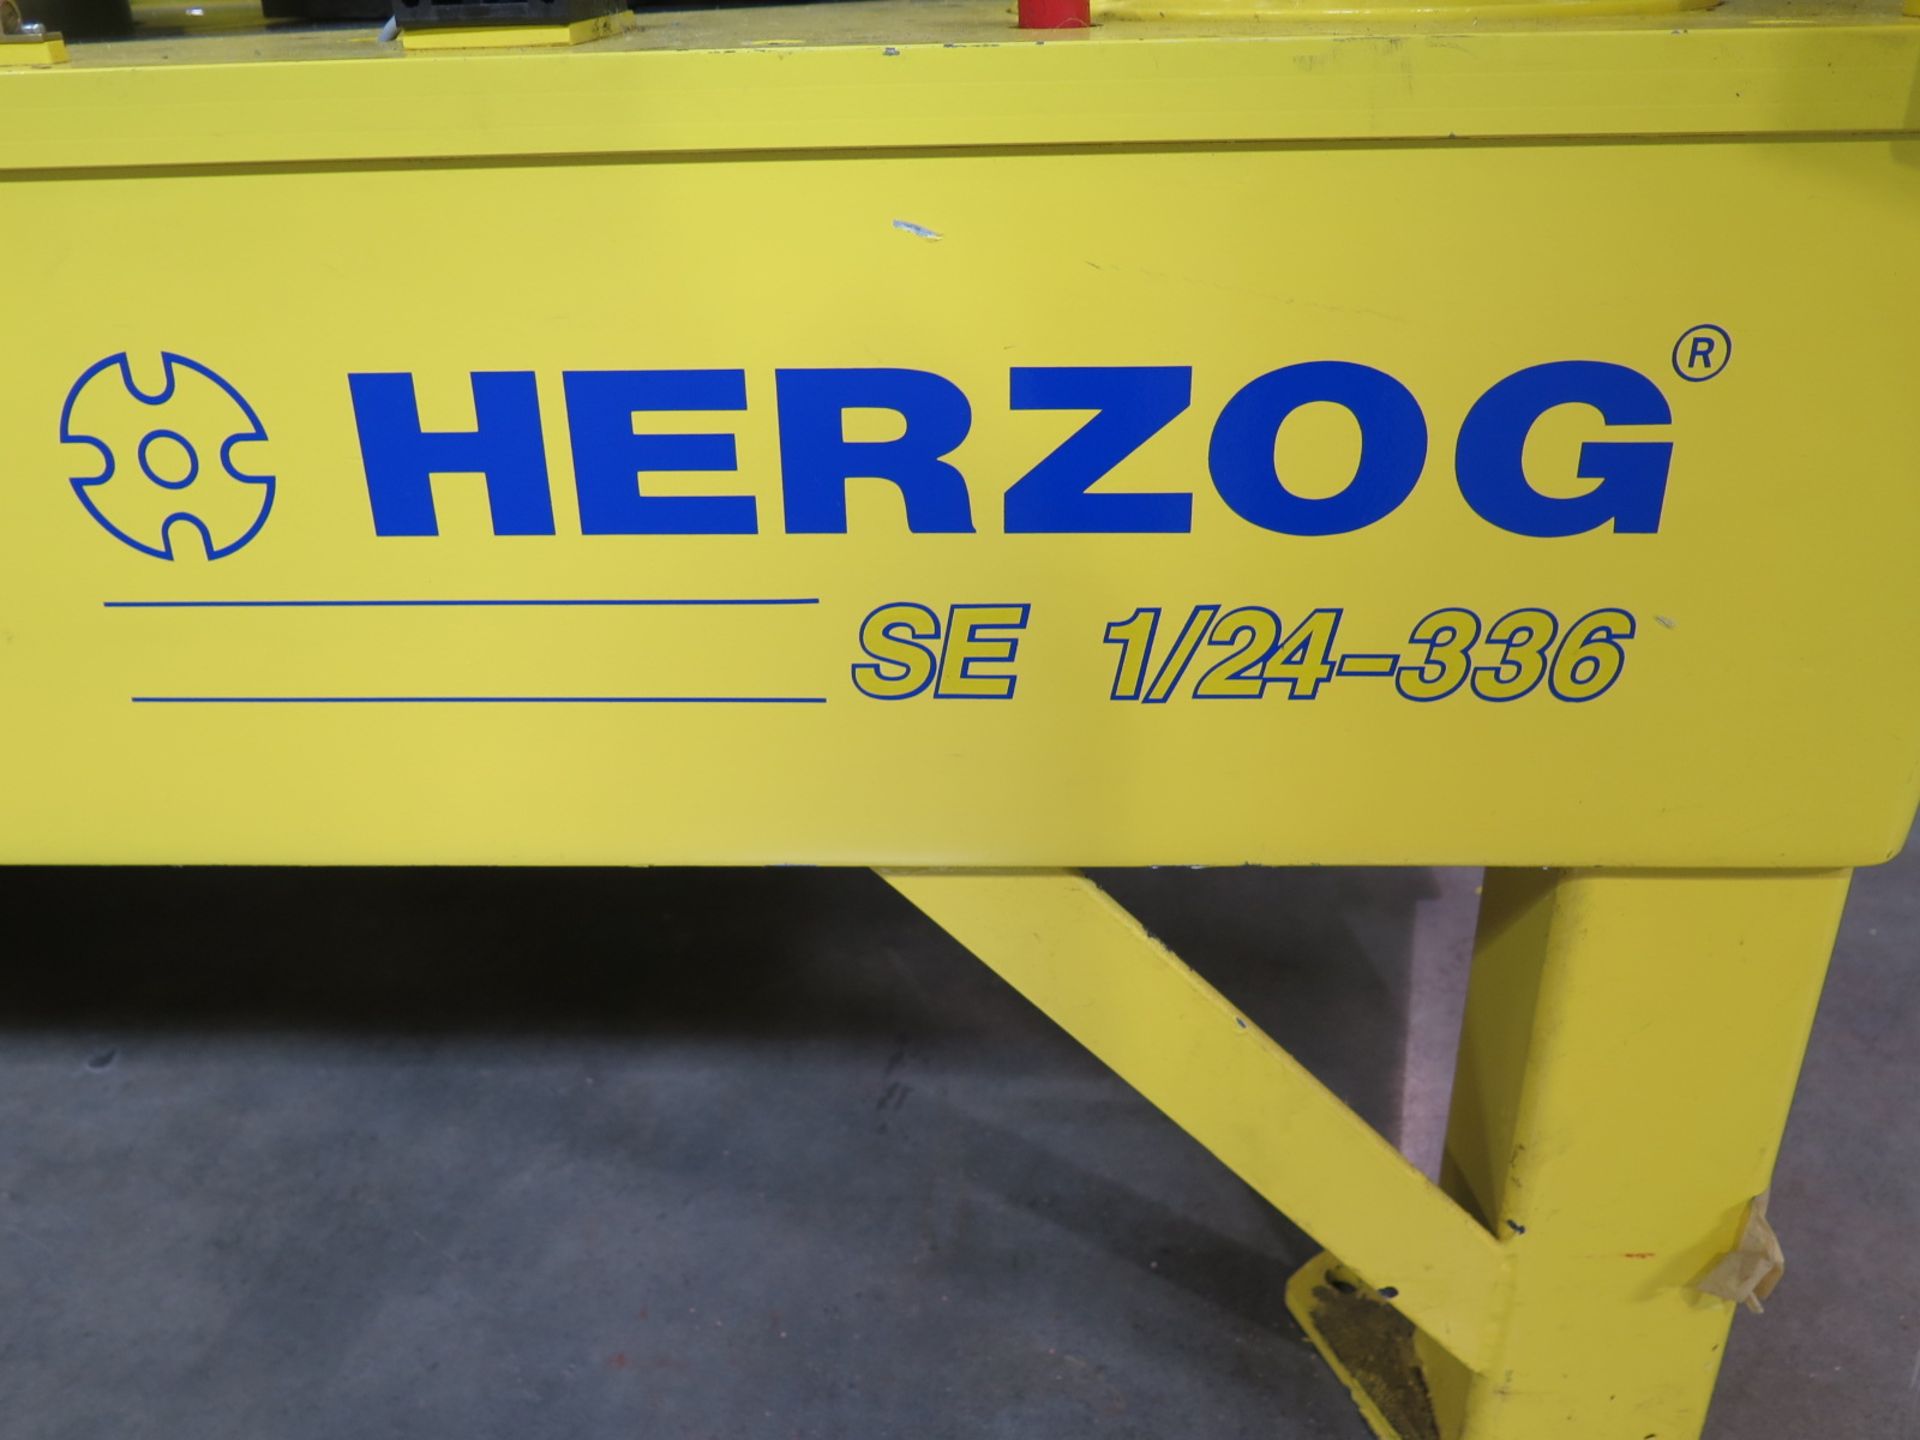 2009 Herzog mdl. SE 1/24-336 Automatic Rope Braiding Machine s/n 112218 w/ Seimens Digital Controls, - Image 7 of 10